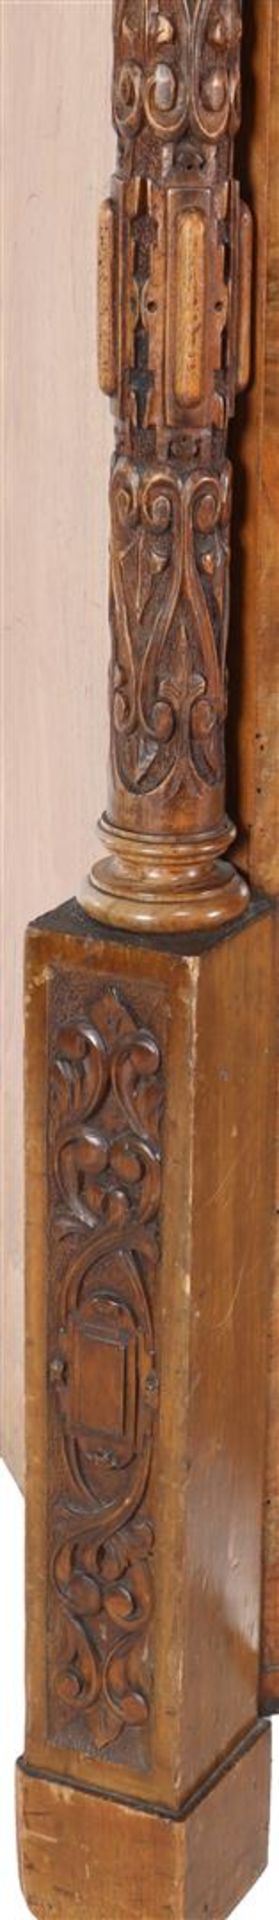 Mahogany veneer cabinet - Image 3 of 3